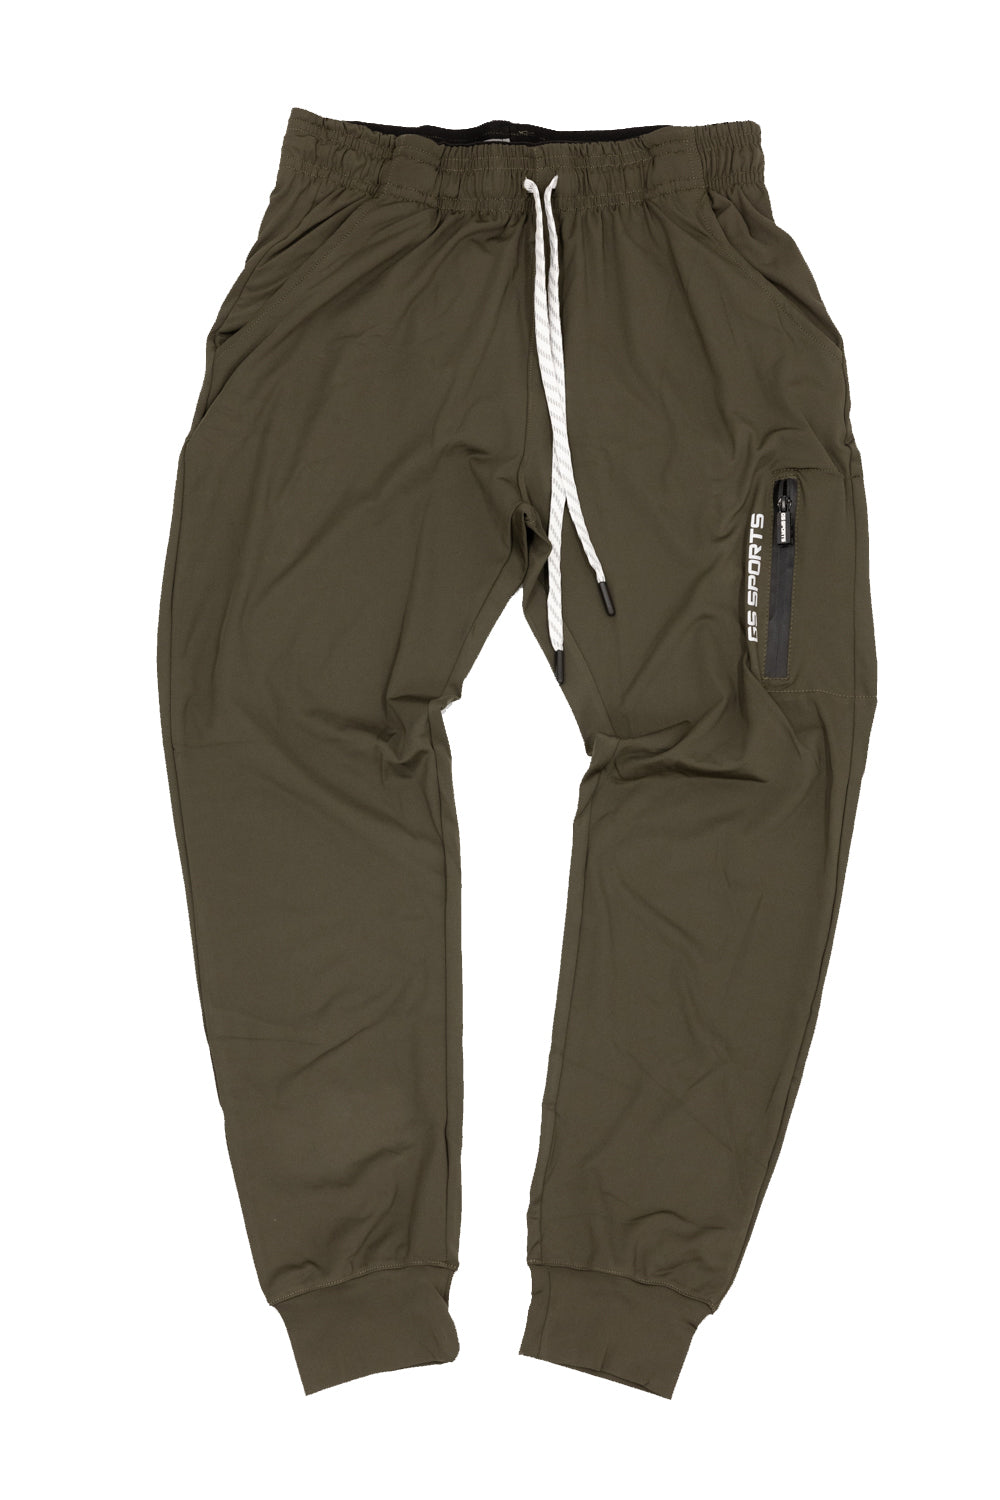 GS Sports Tech Jogger Pants (Short) - Olive